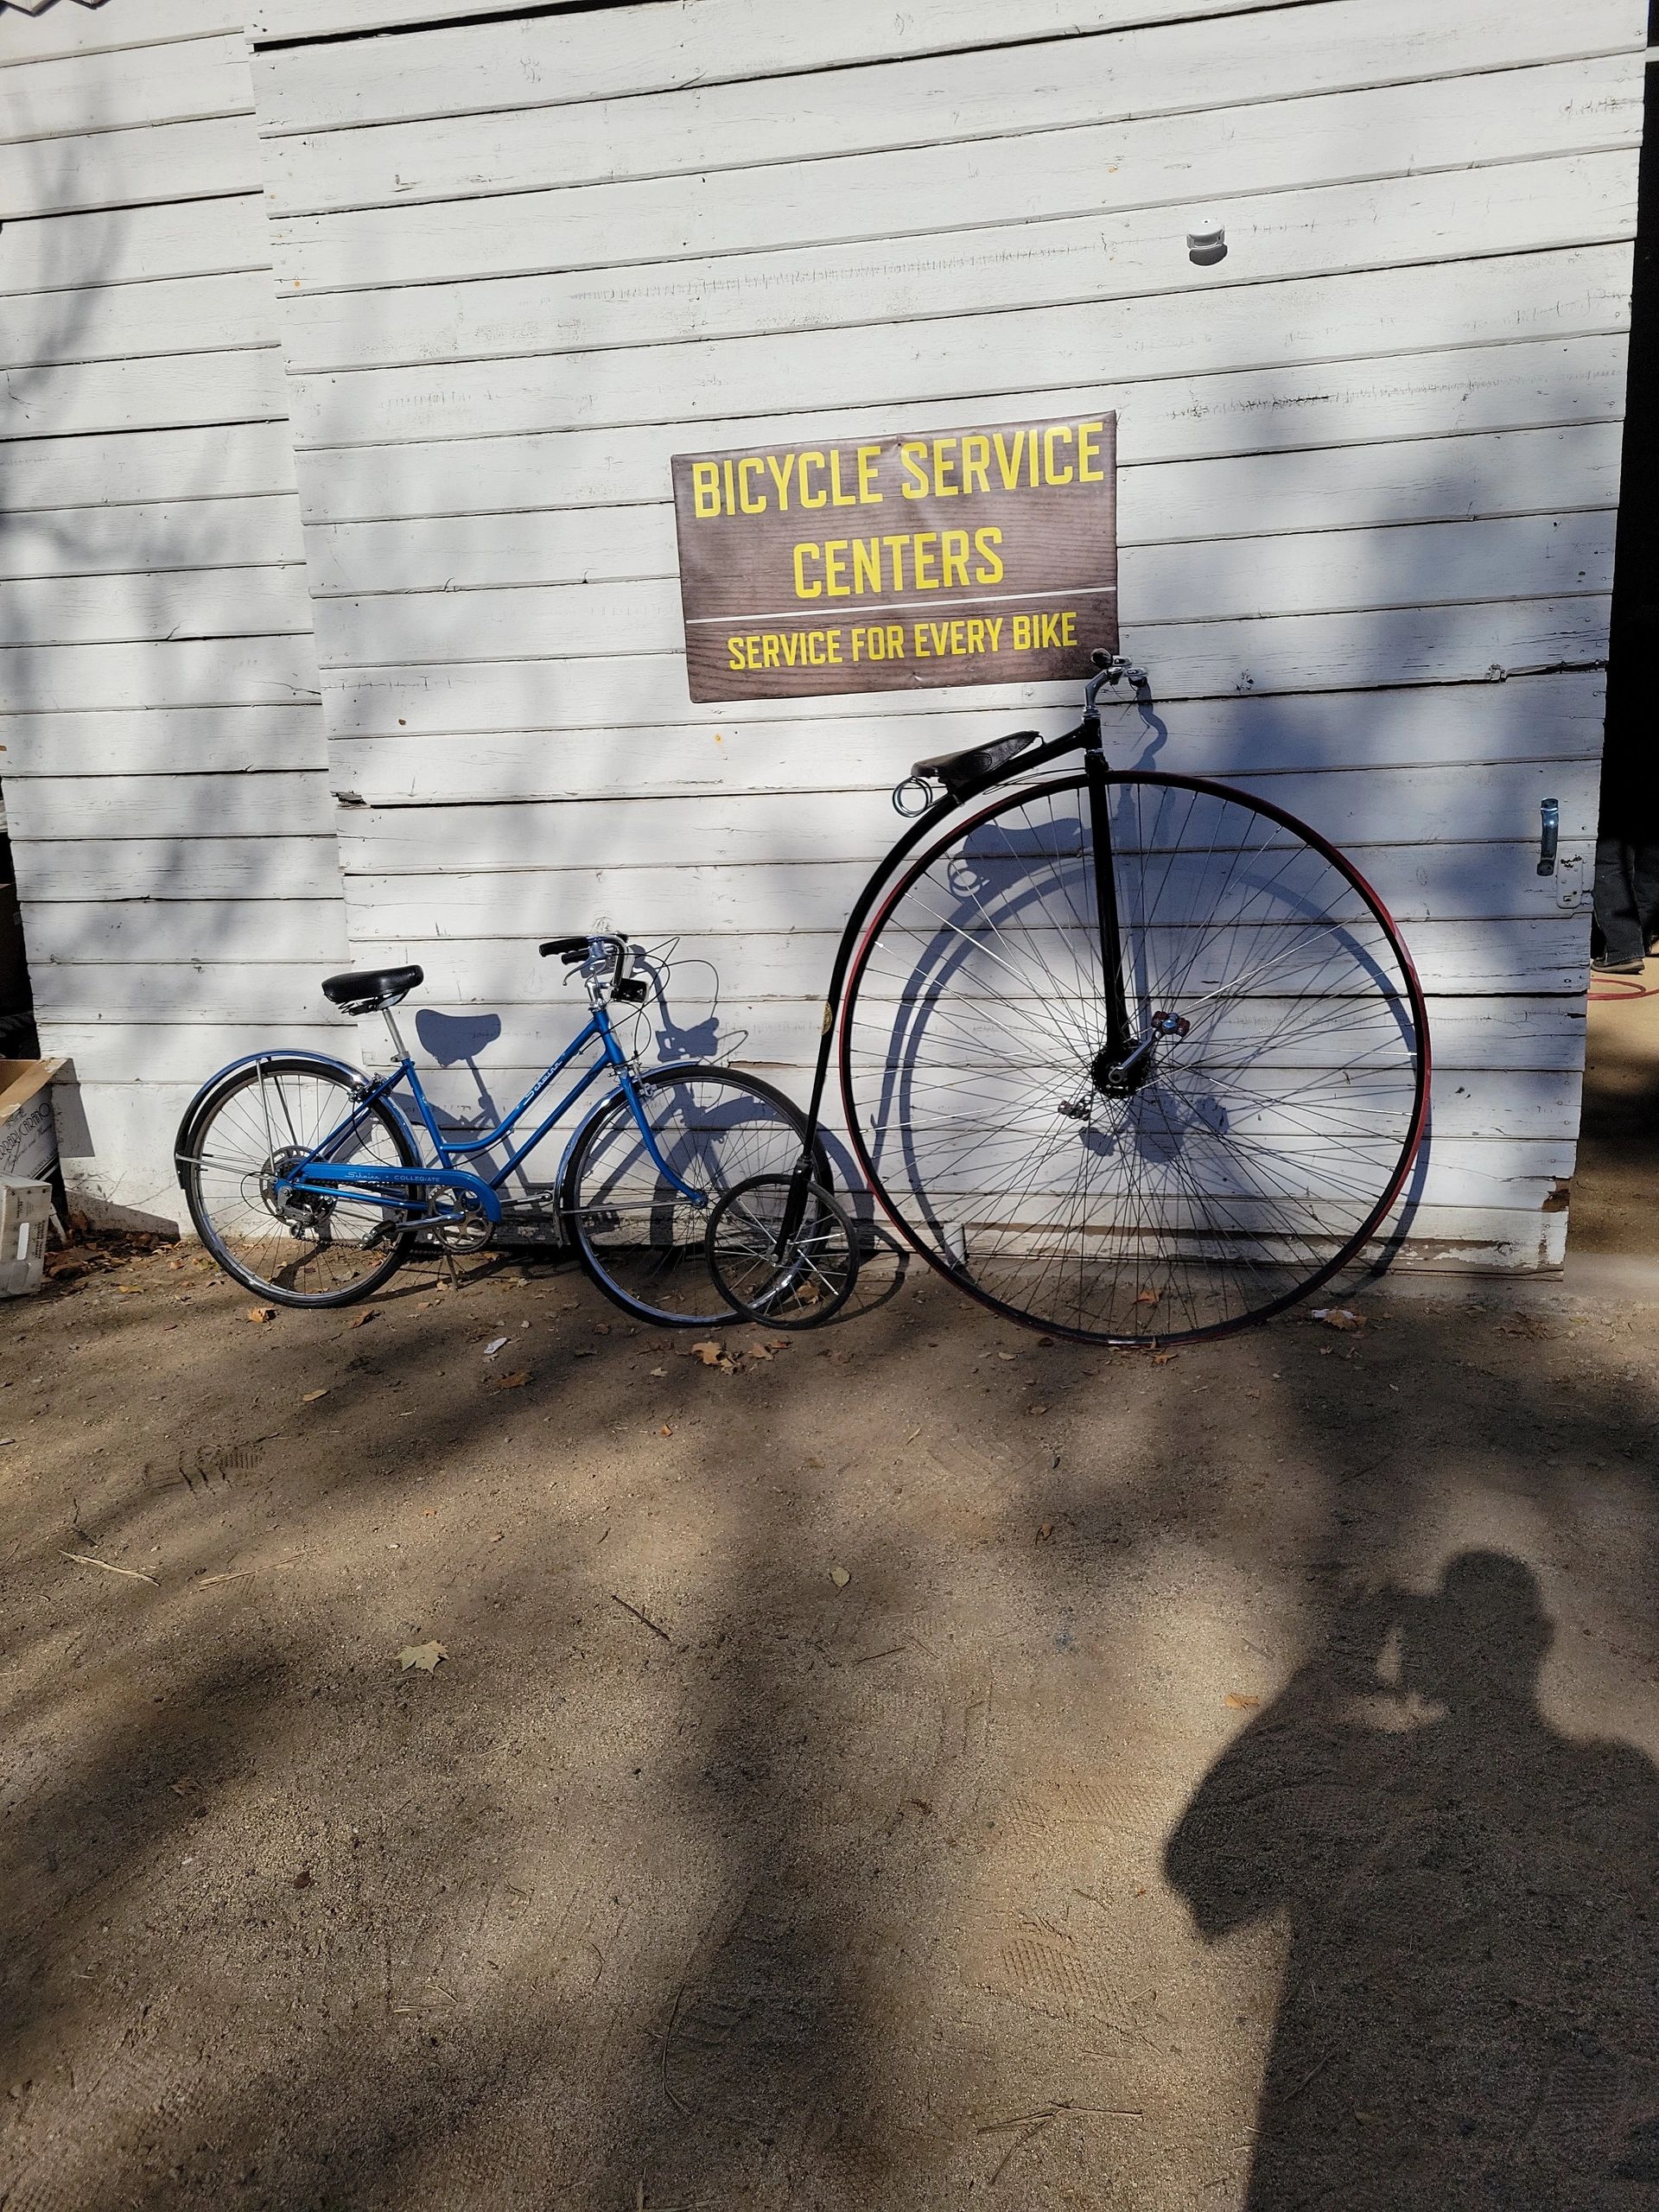 (c) Bicycleservicecenter.com